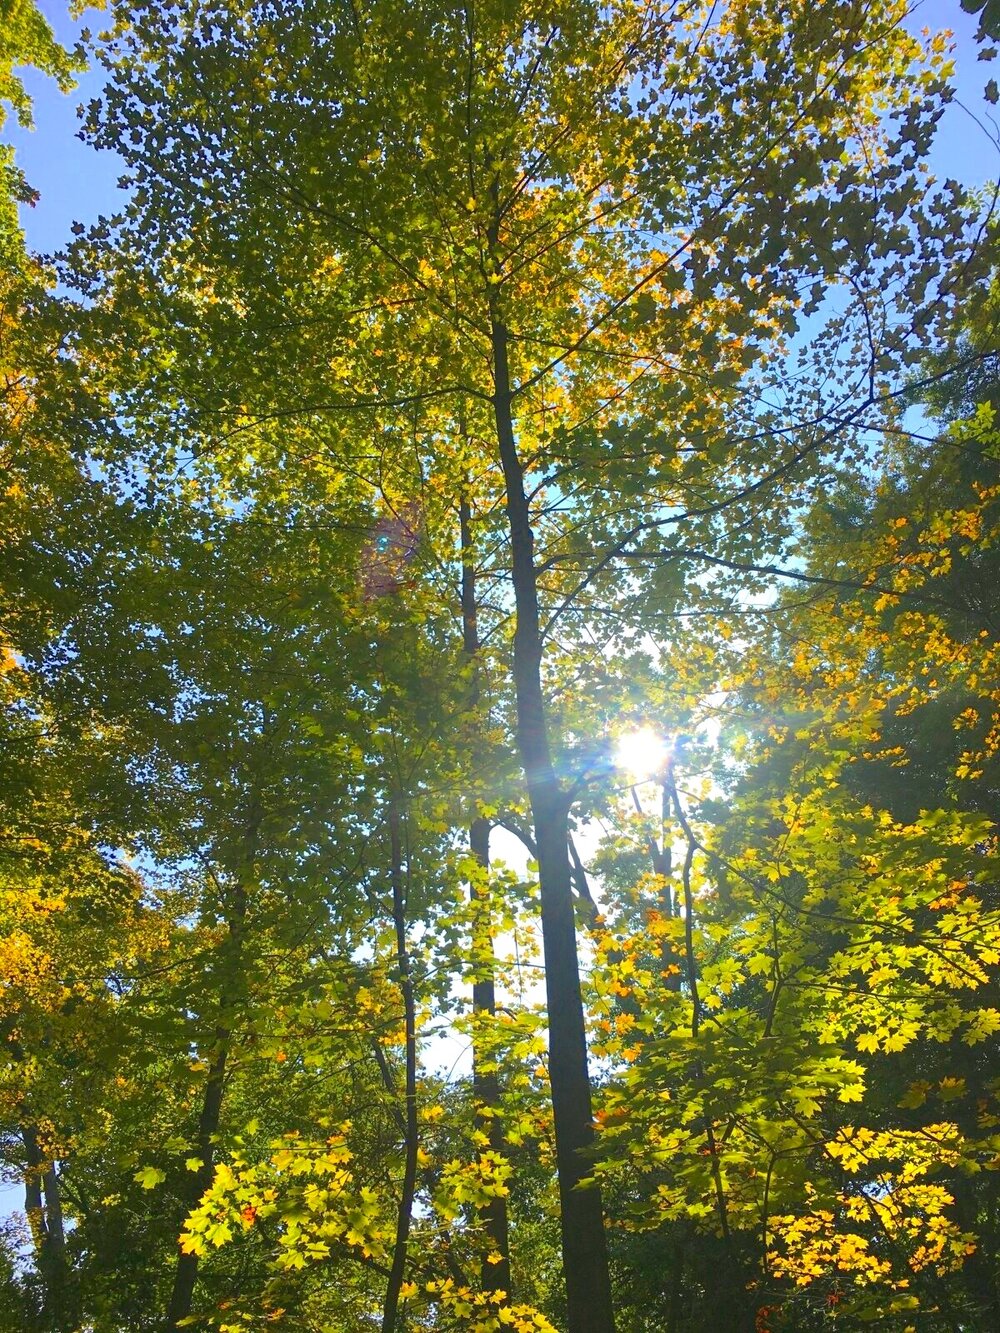 Sun shining through trees on Hemlock path - Brecksville Reservation, Cleveland Metroparks hiking